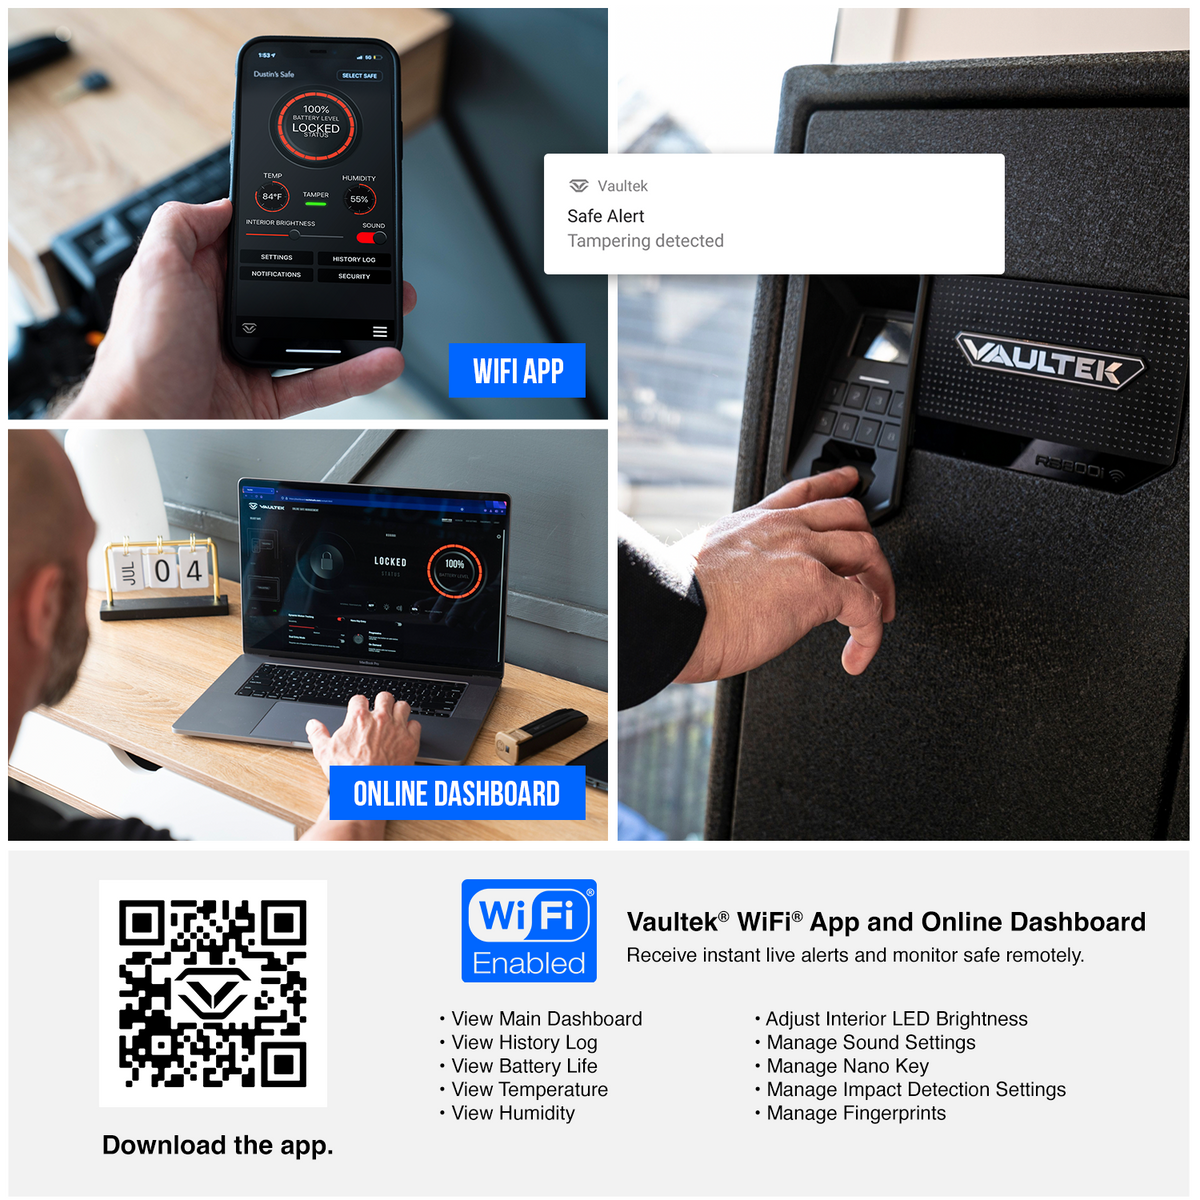 Vaultek® - RS800i Rugged Wi-Fi Biometric Smart Rifle Safe